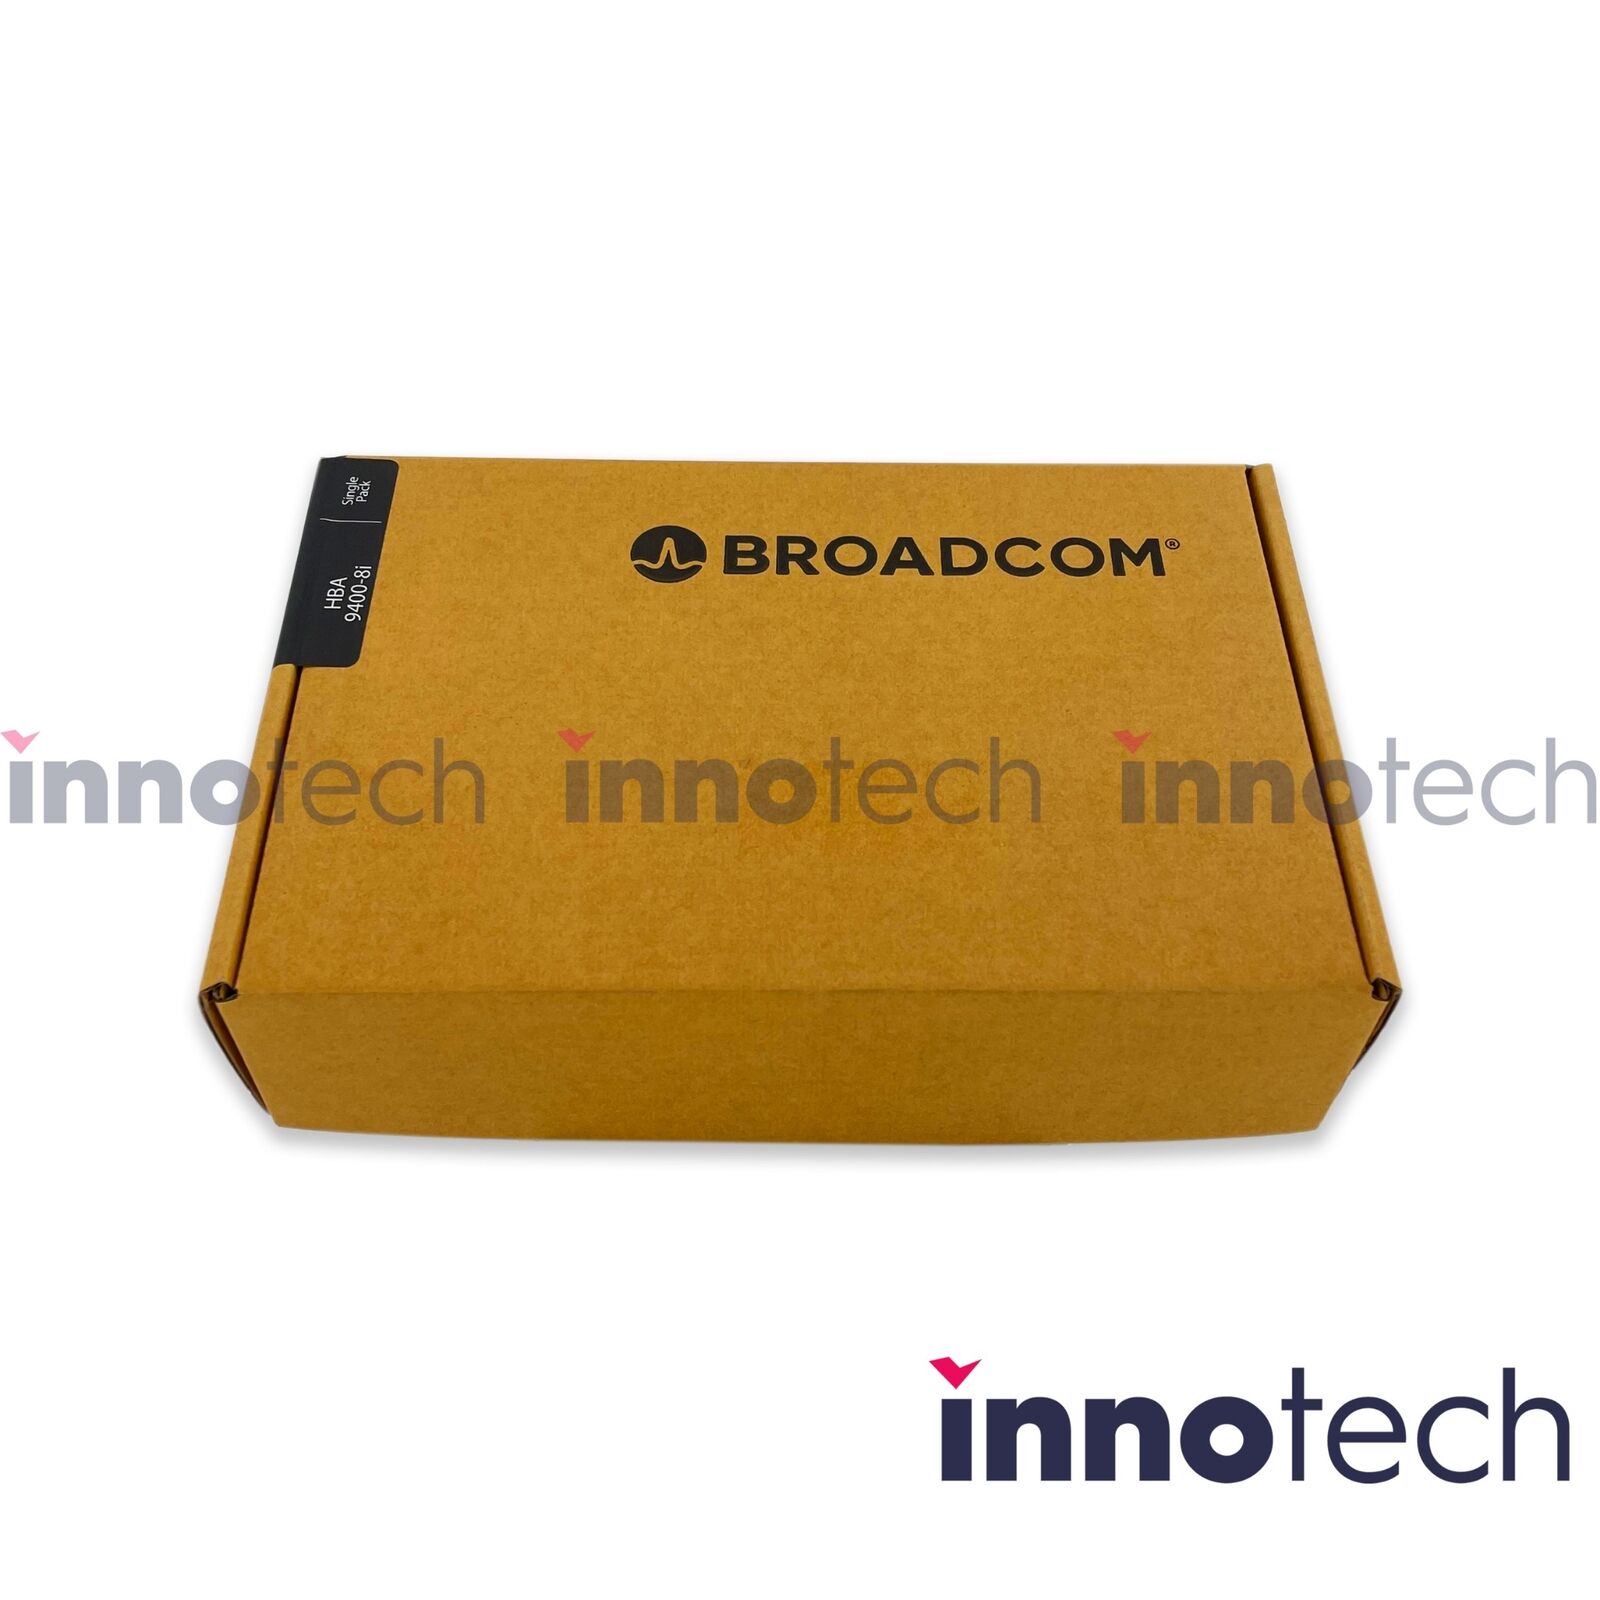 Broadcom LSI 9400-8i Tri-Mode 12G SAS / SATA PCIe HBA New Sealed